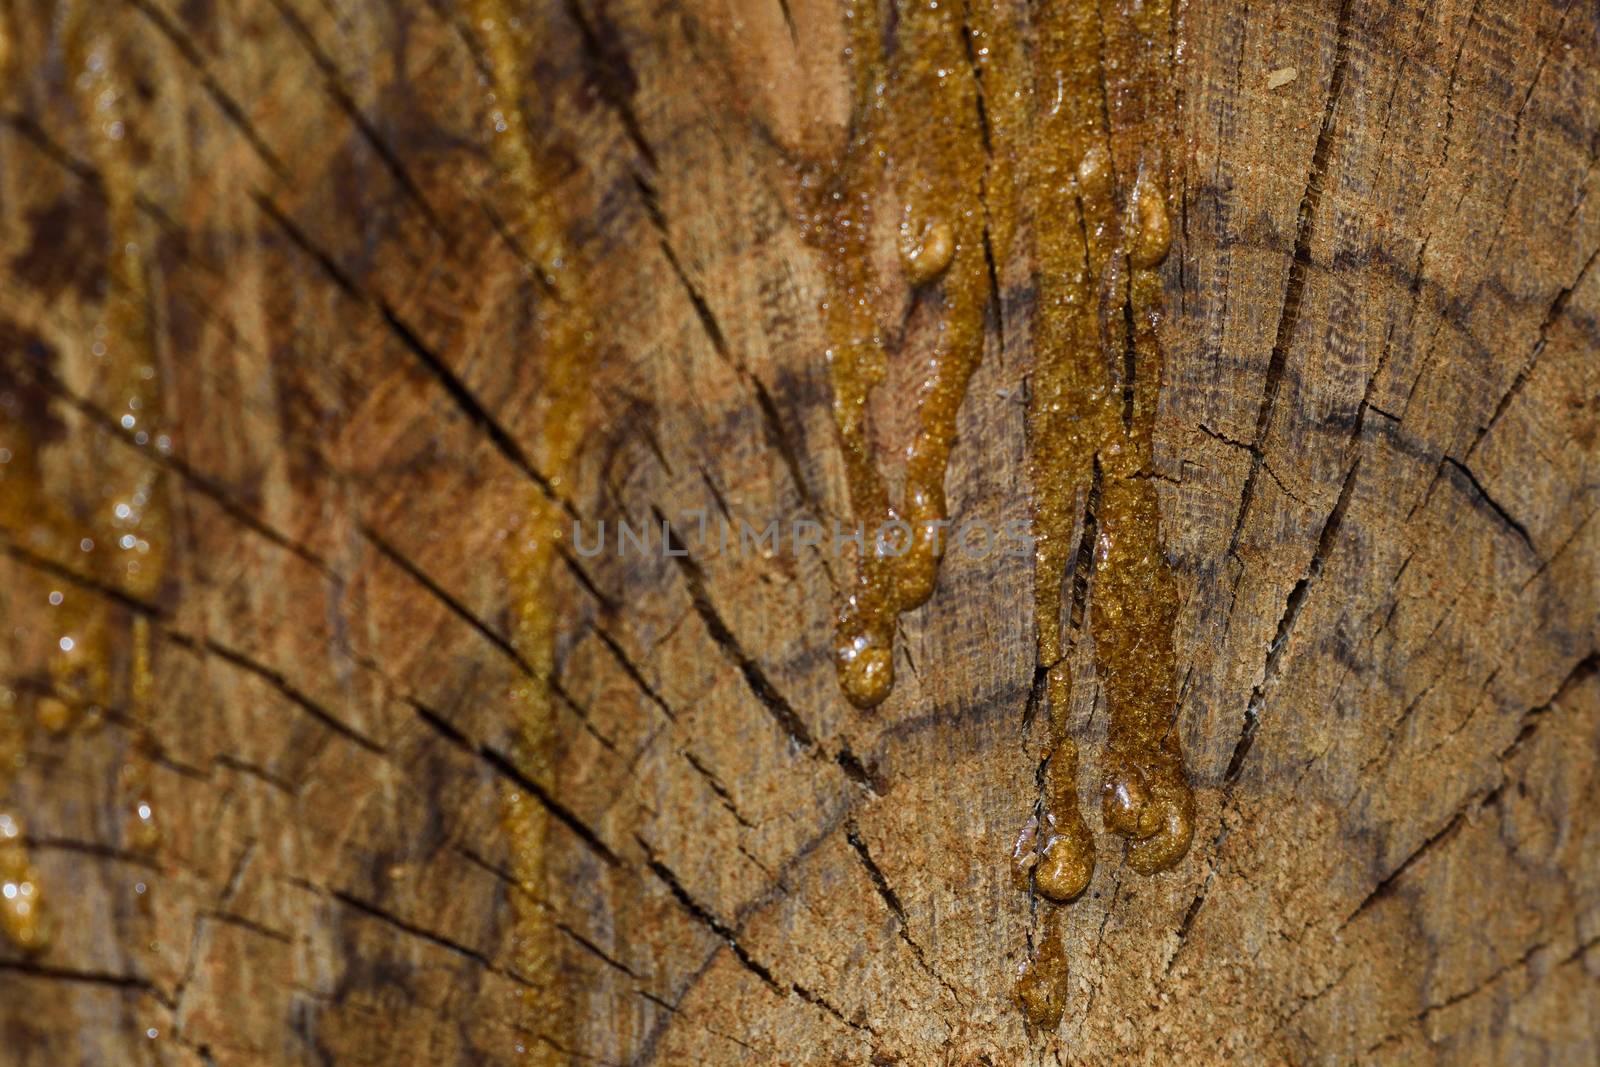 Streaks of hardened wood sap running down an acacia wood stump crosscut (Vachellia sp.), Pretoria, South Africa